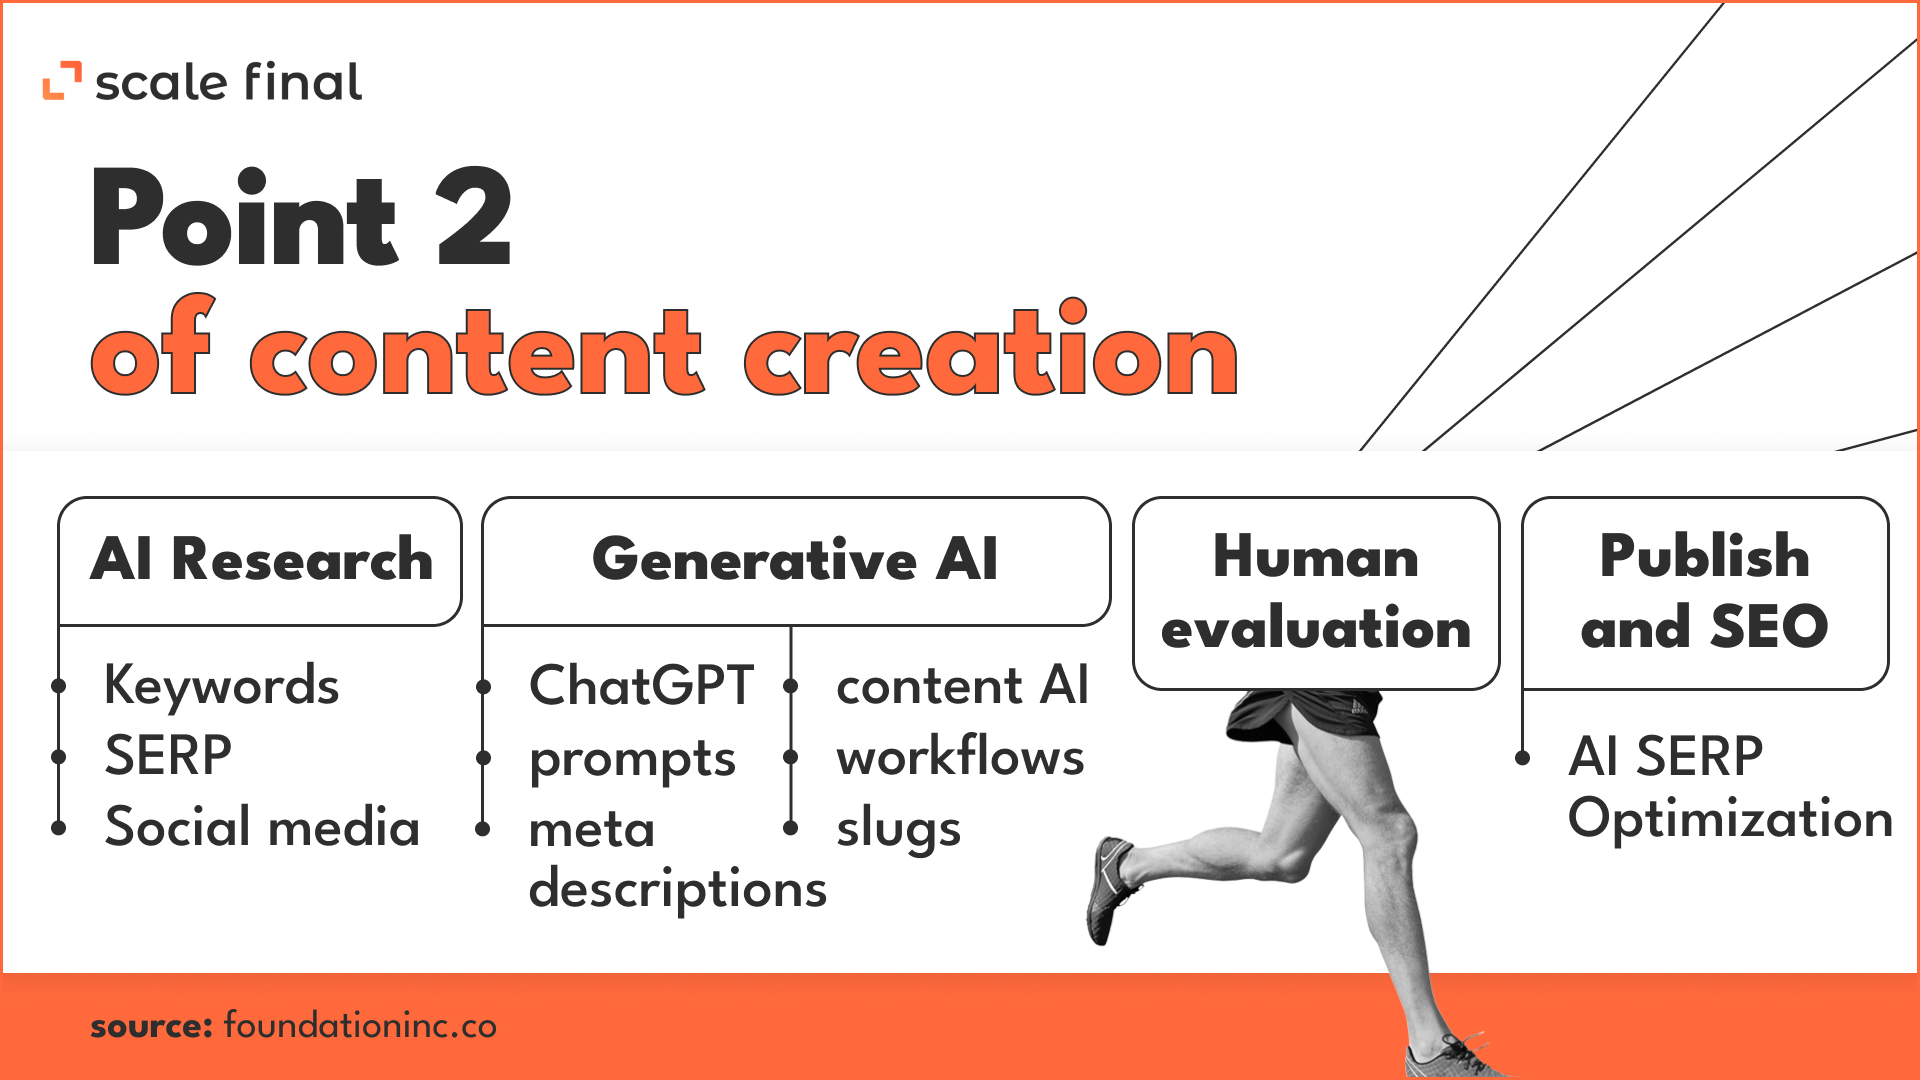 Point 2 of content creationAI Research Keywords, SERP, Social mediaGenerative AI ChatGPT prompts meta descriptions content AI workflows slugs Human evaluationPublish and SEO AI SERP Optimization 